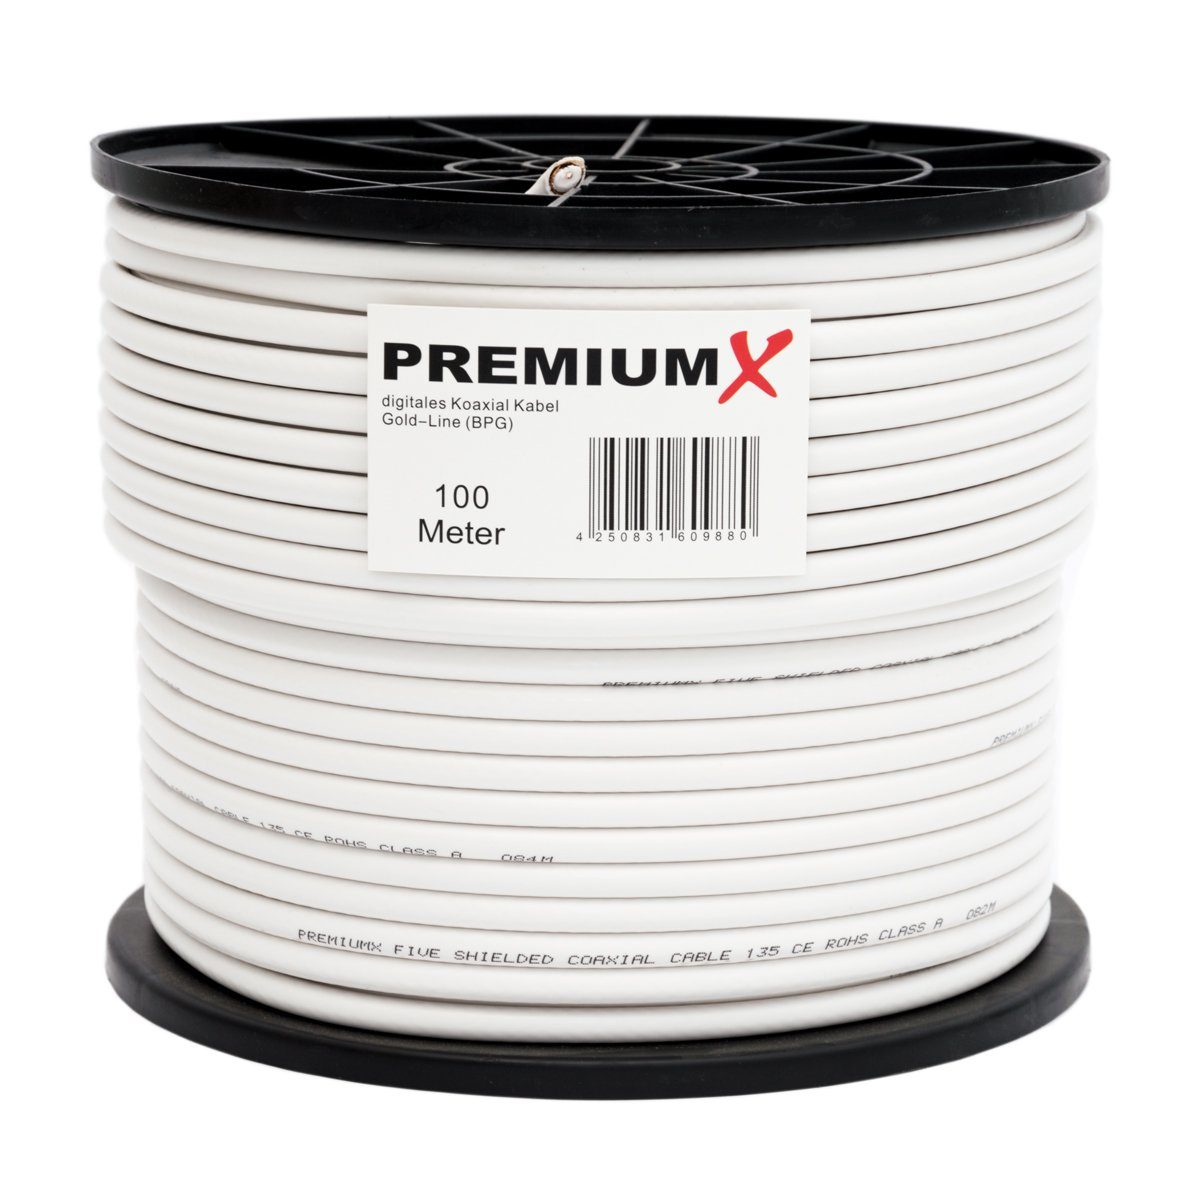 PremiumX 100m 5-Fach BASIC 135dB Gold-Line Koaxial Kabel SAT-Kabel Abisolierer PRO